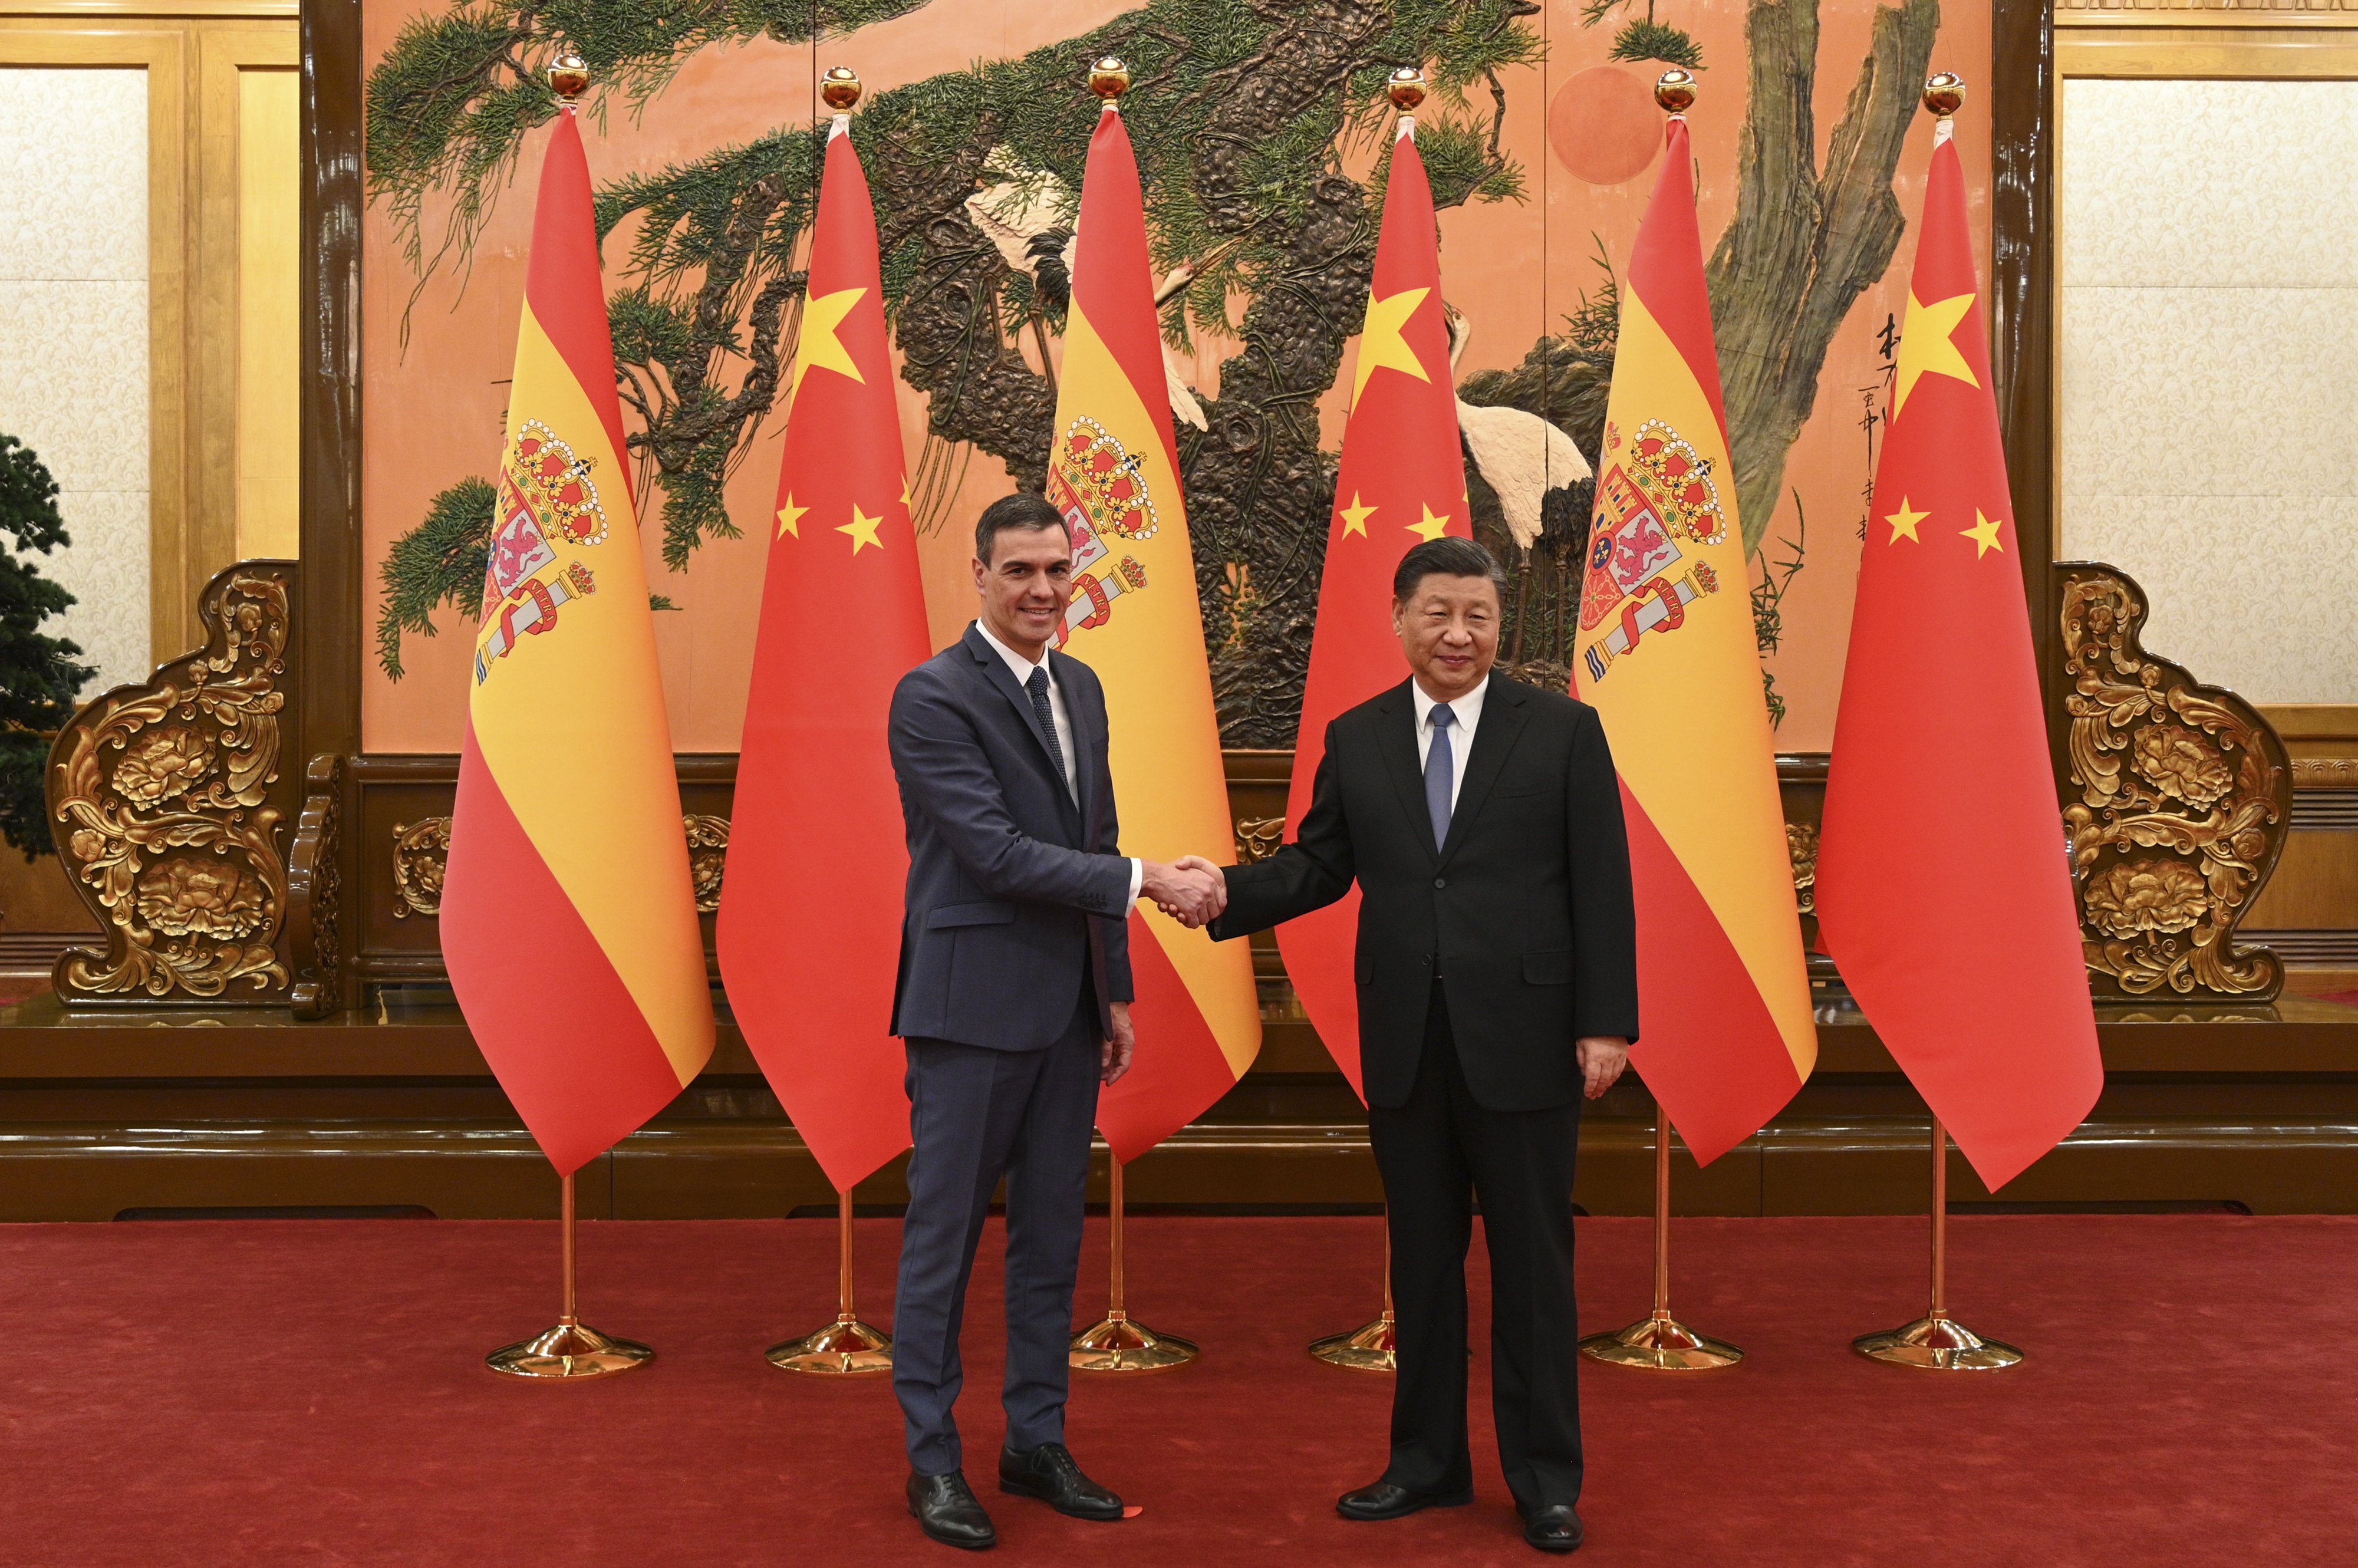 Pedro Sánchez i Xi Jinping a Pequín, 20230331 (Efe)